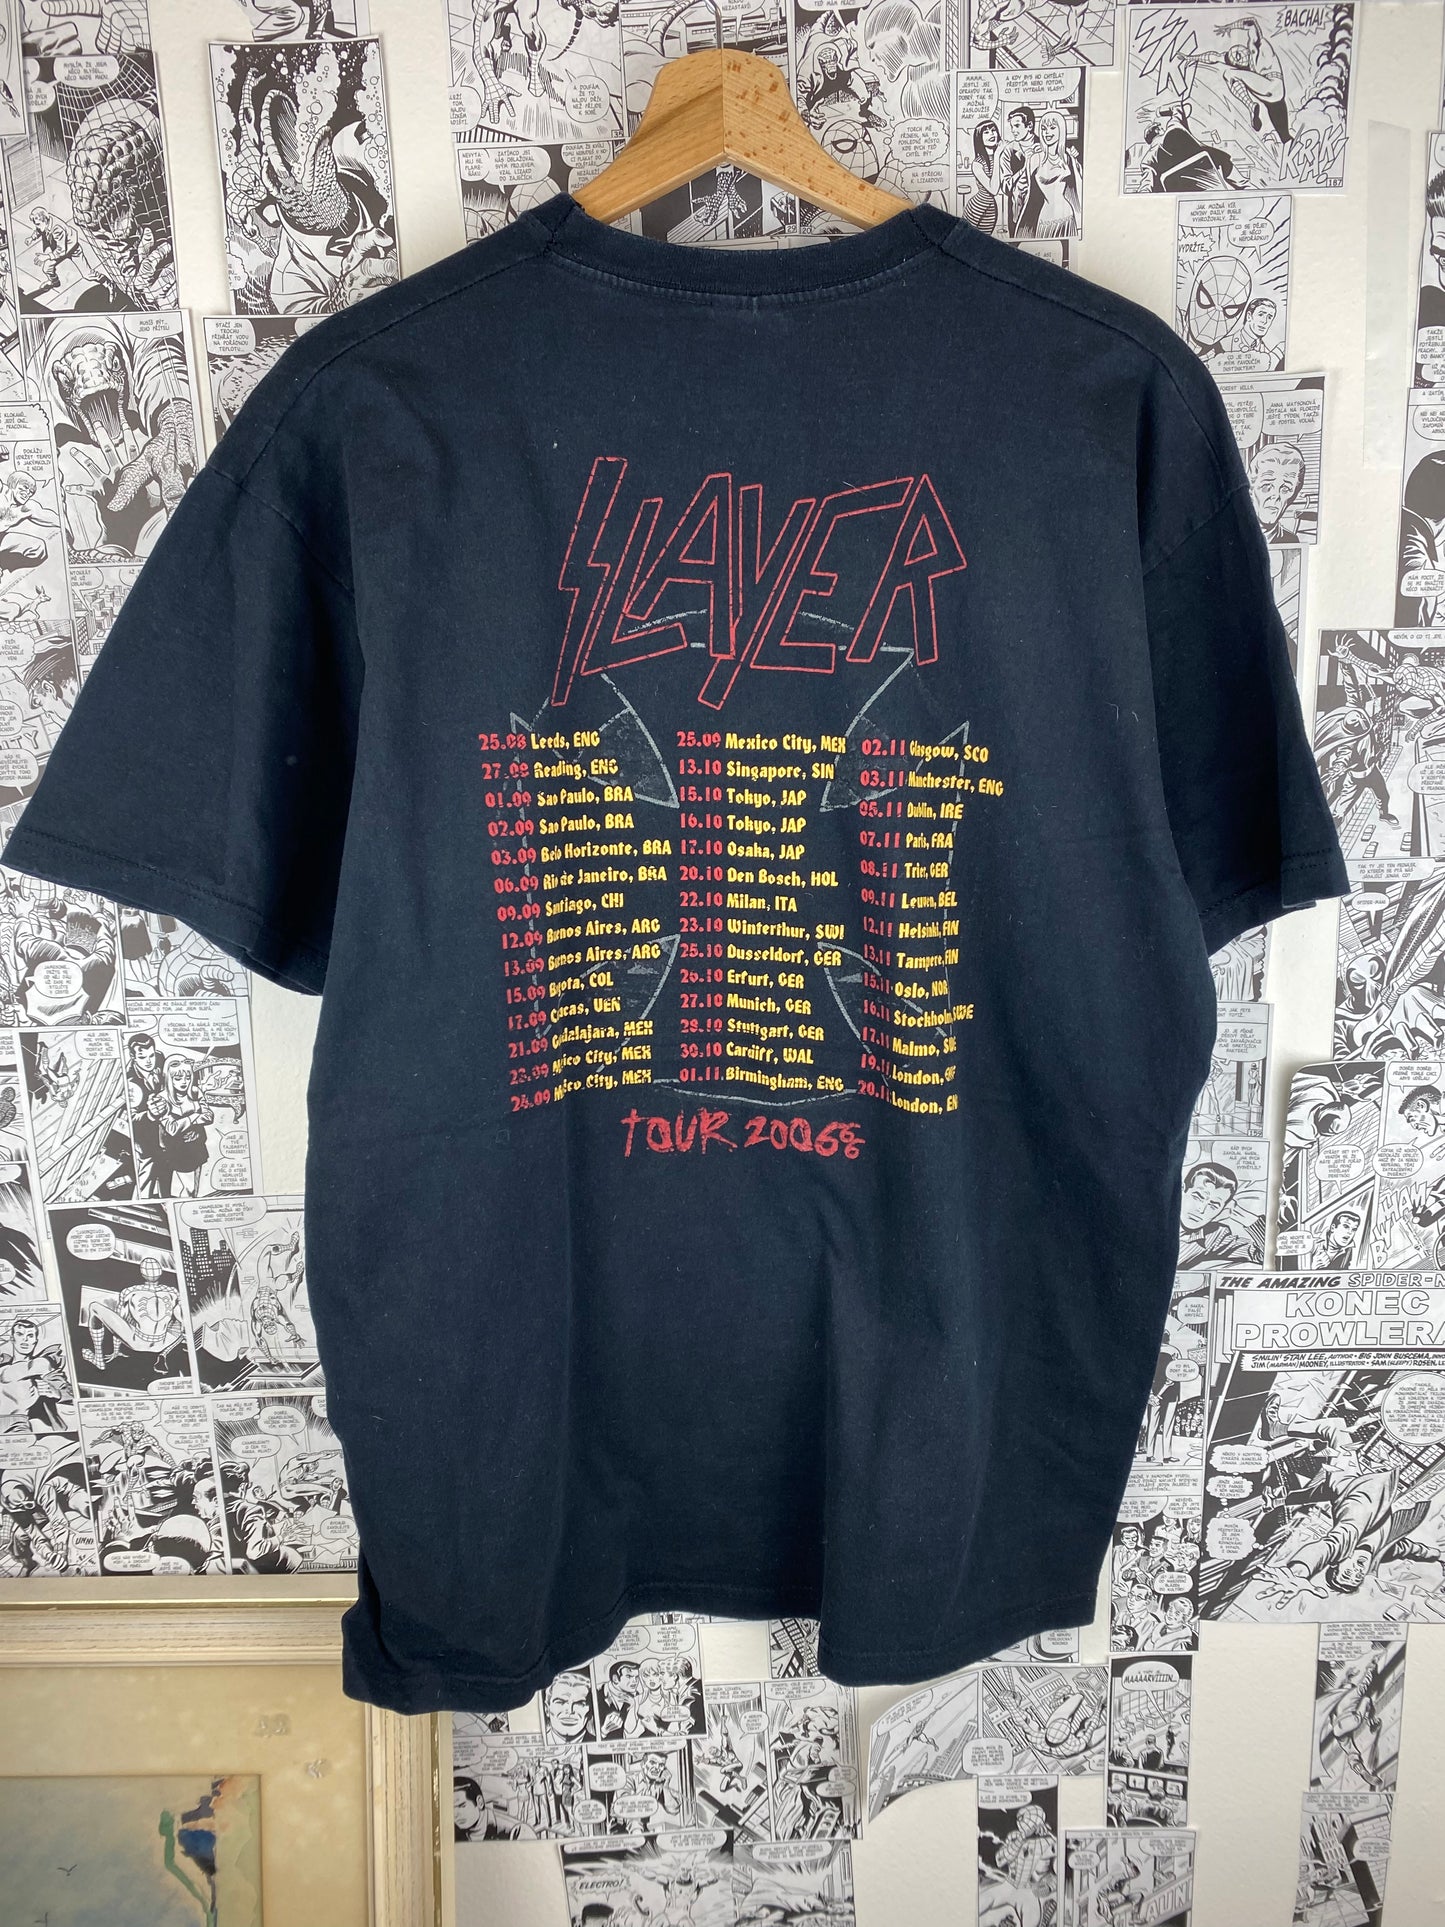 Vintage Slayer 2006 tour t-shirt - size XL